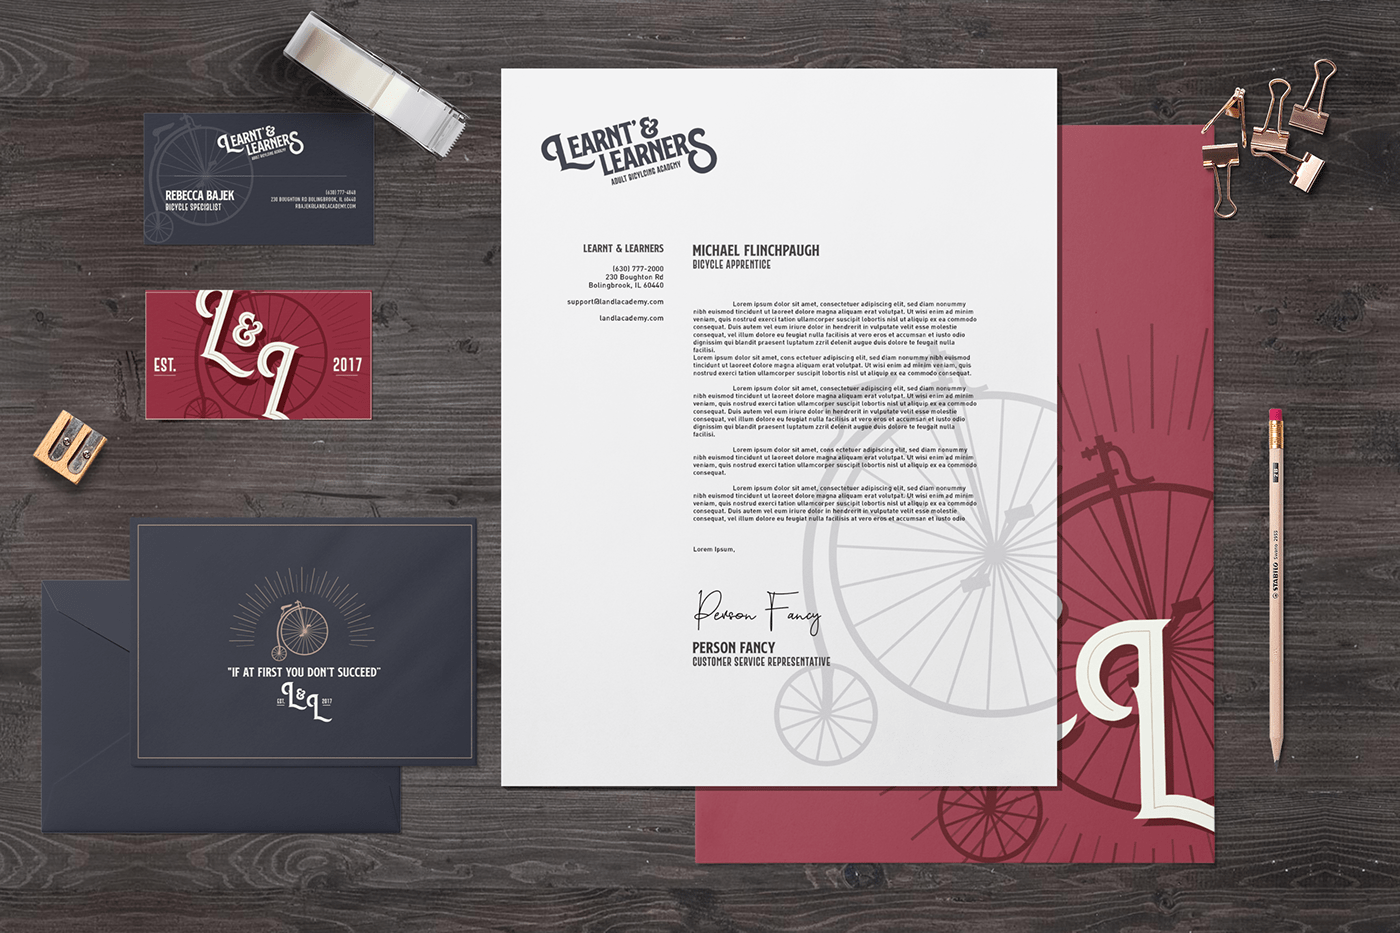 branding  corporateid corporateidentity graphicdesign graphicdesigner stationary design designer student bicycling